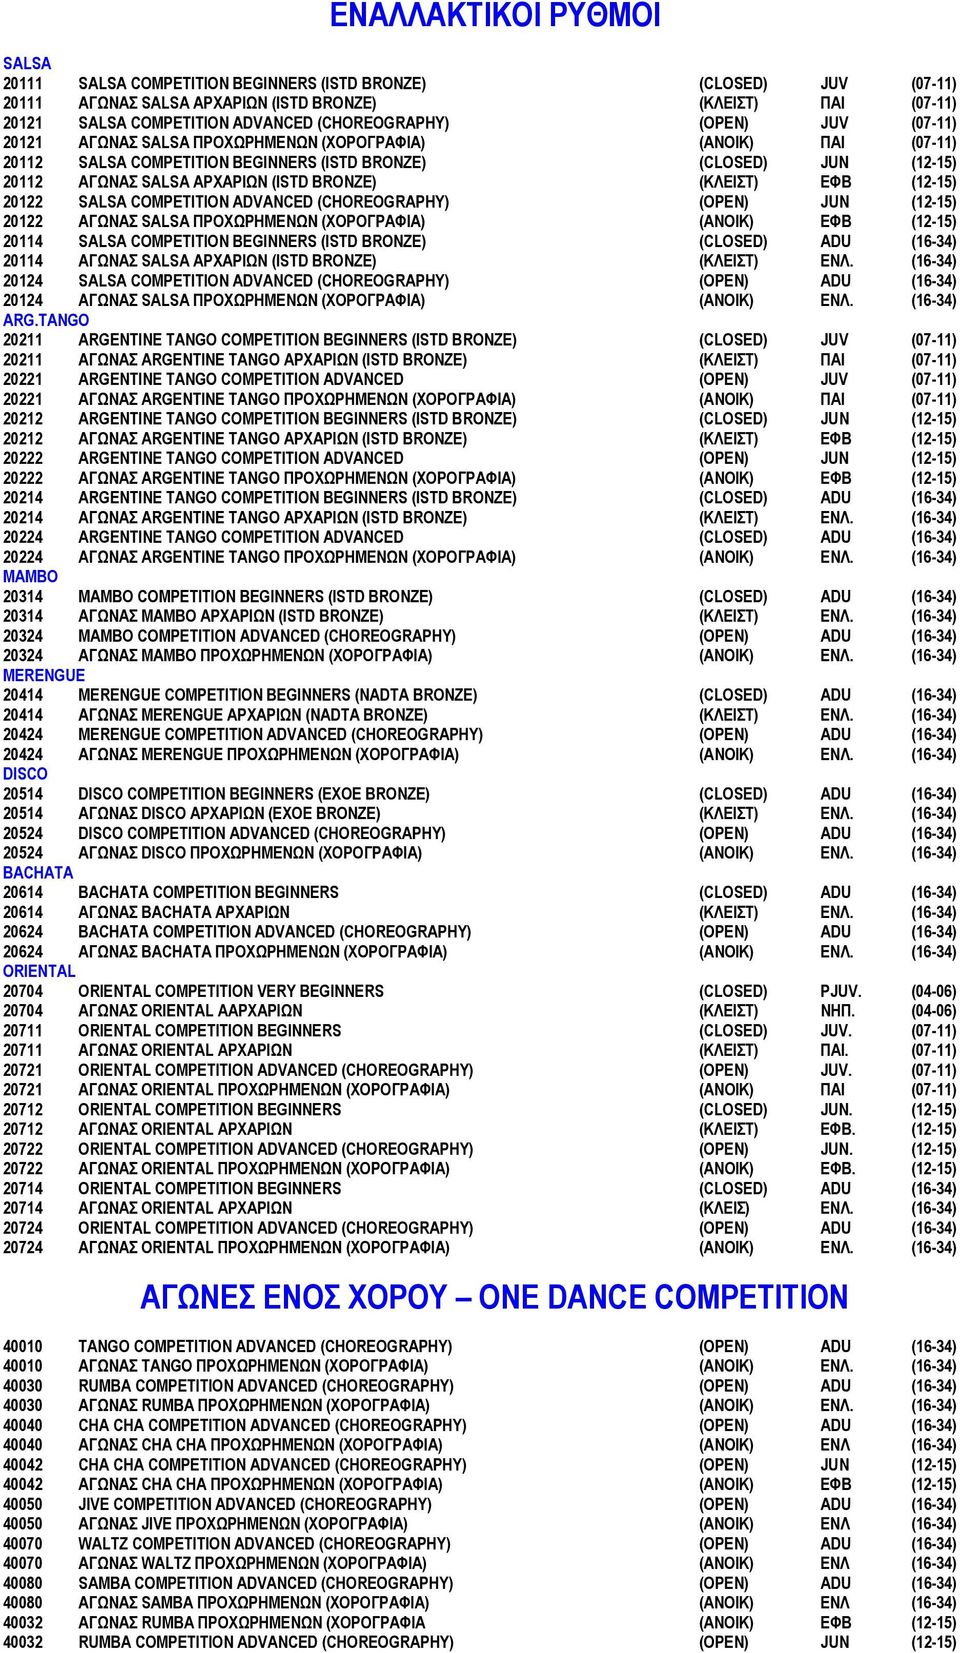 (ISTD BRONZE) (ΚΛΕΙΣΤ) ΕΦΒ (12-15) 20122 SALSA COMPETITION ADVANCED (CHOREOGRAPHY) (OPEN) JUN (12-15) 20122 ΑΓΩΝΑΣ SALSA ΠΡΟΧΩΡΗΜΕΝΩΝ (ΧΟΡΟΓΡΑΦΙΑ) (ΑΝΟΙΚ) ΕΦΒ (12-15) 20114 SALSA COMPETITION